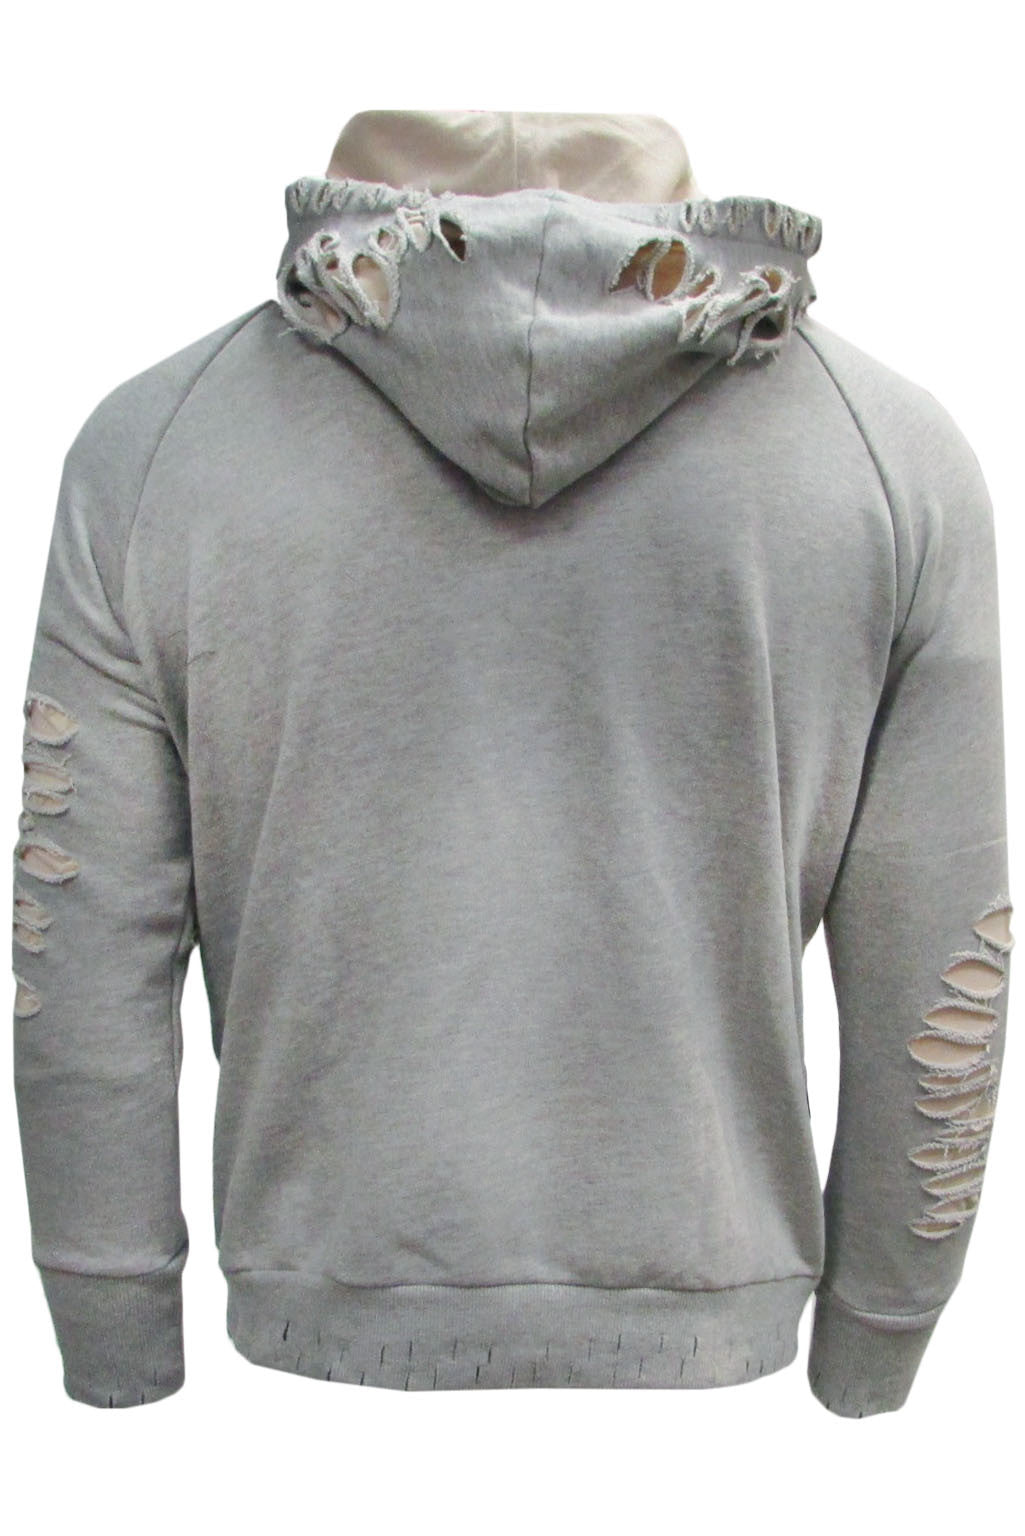 distressed grey sweatshirt